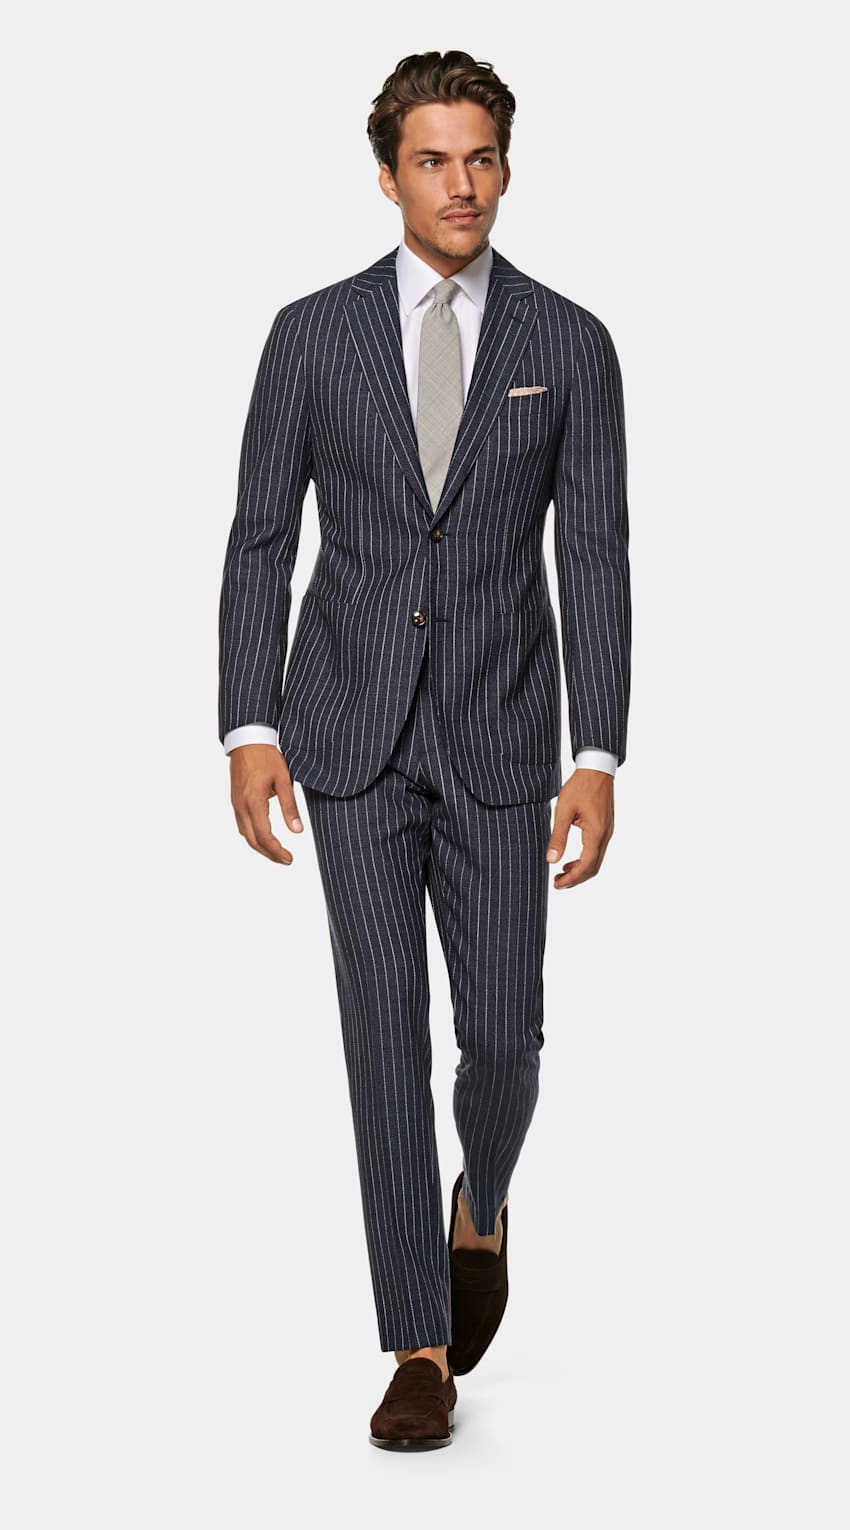 SUITSUPPLY  by Lanificio Cerruti, Italy Blue Stripe Havana Suit 